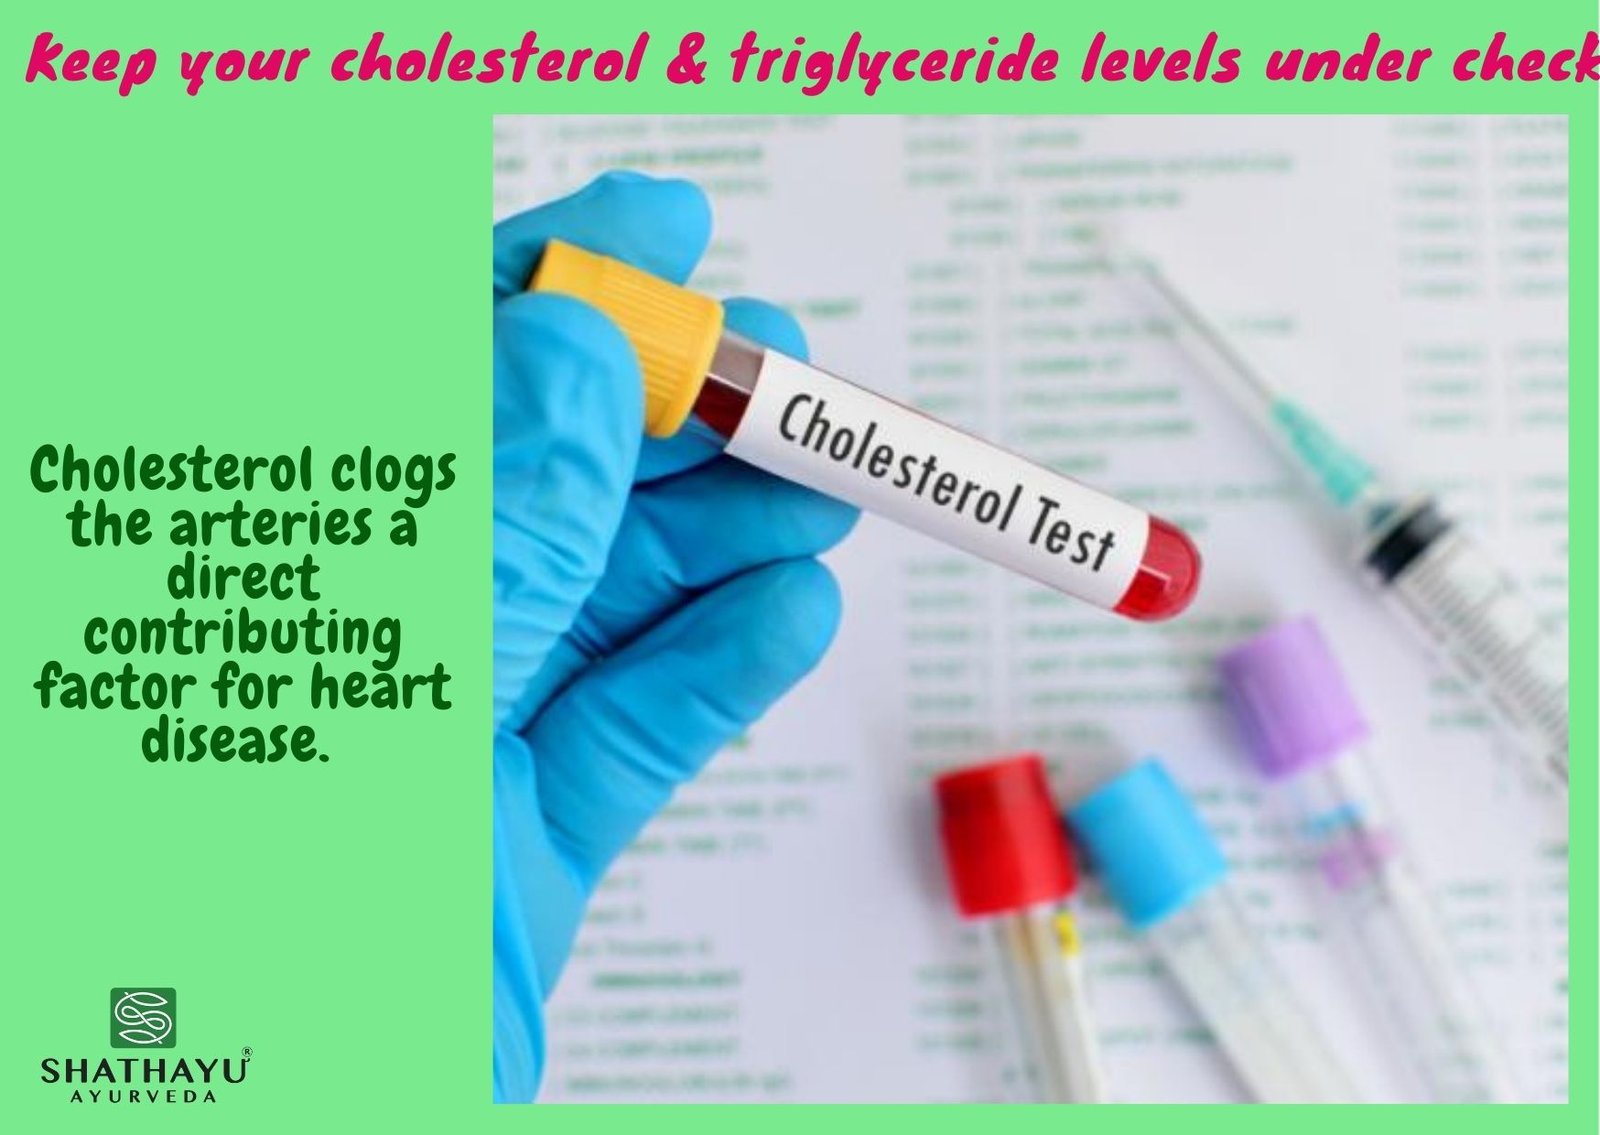 Keep blood cholesterol under check